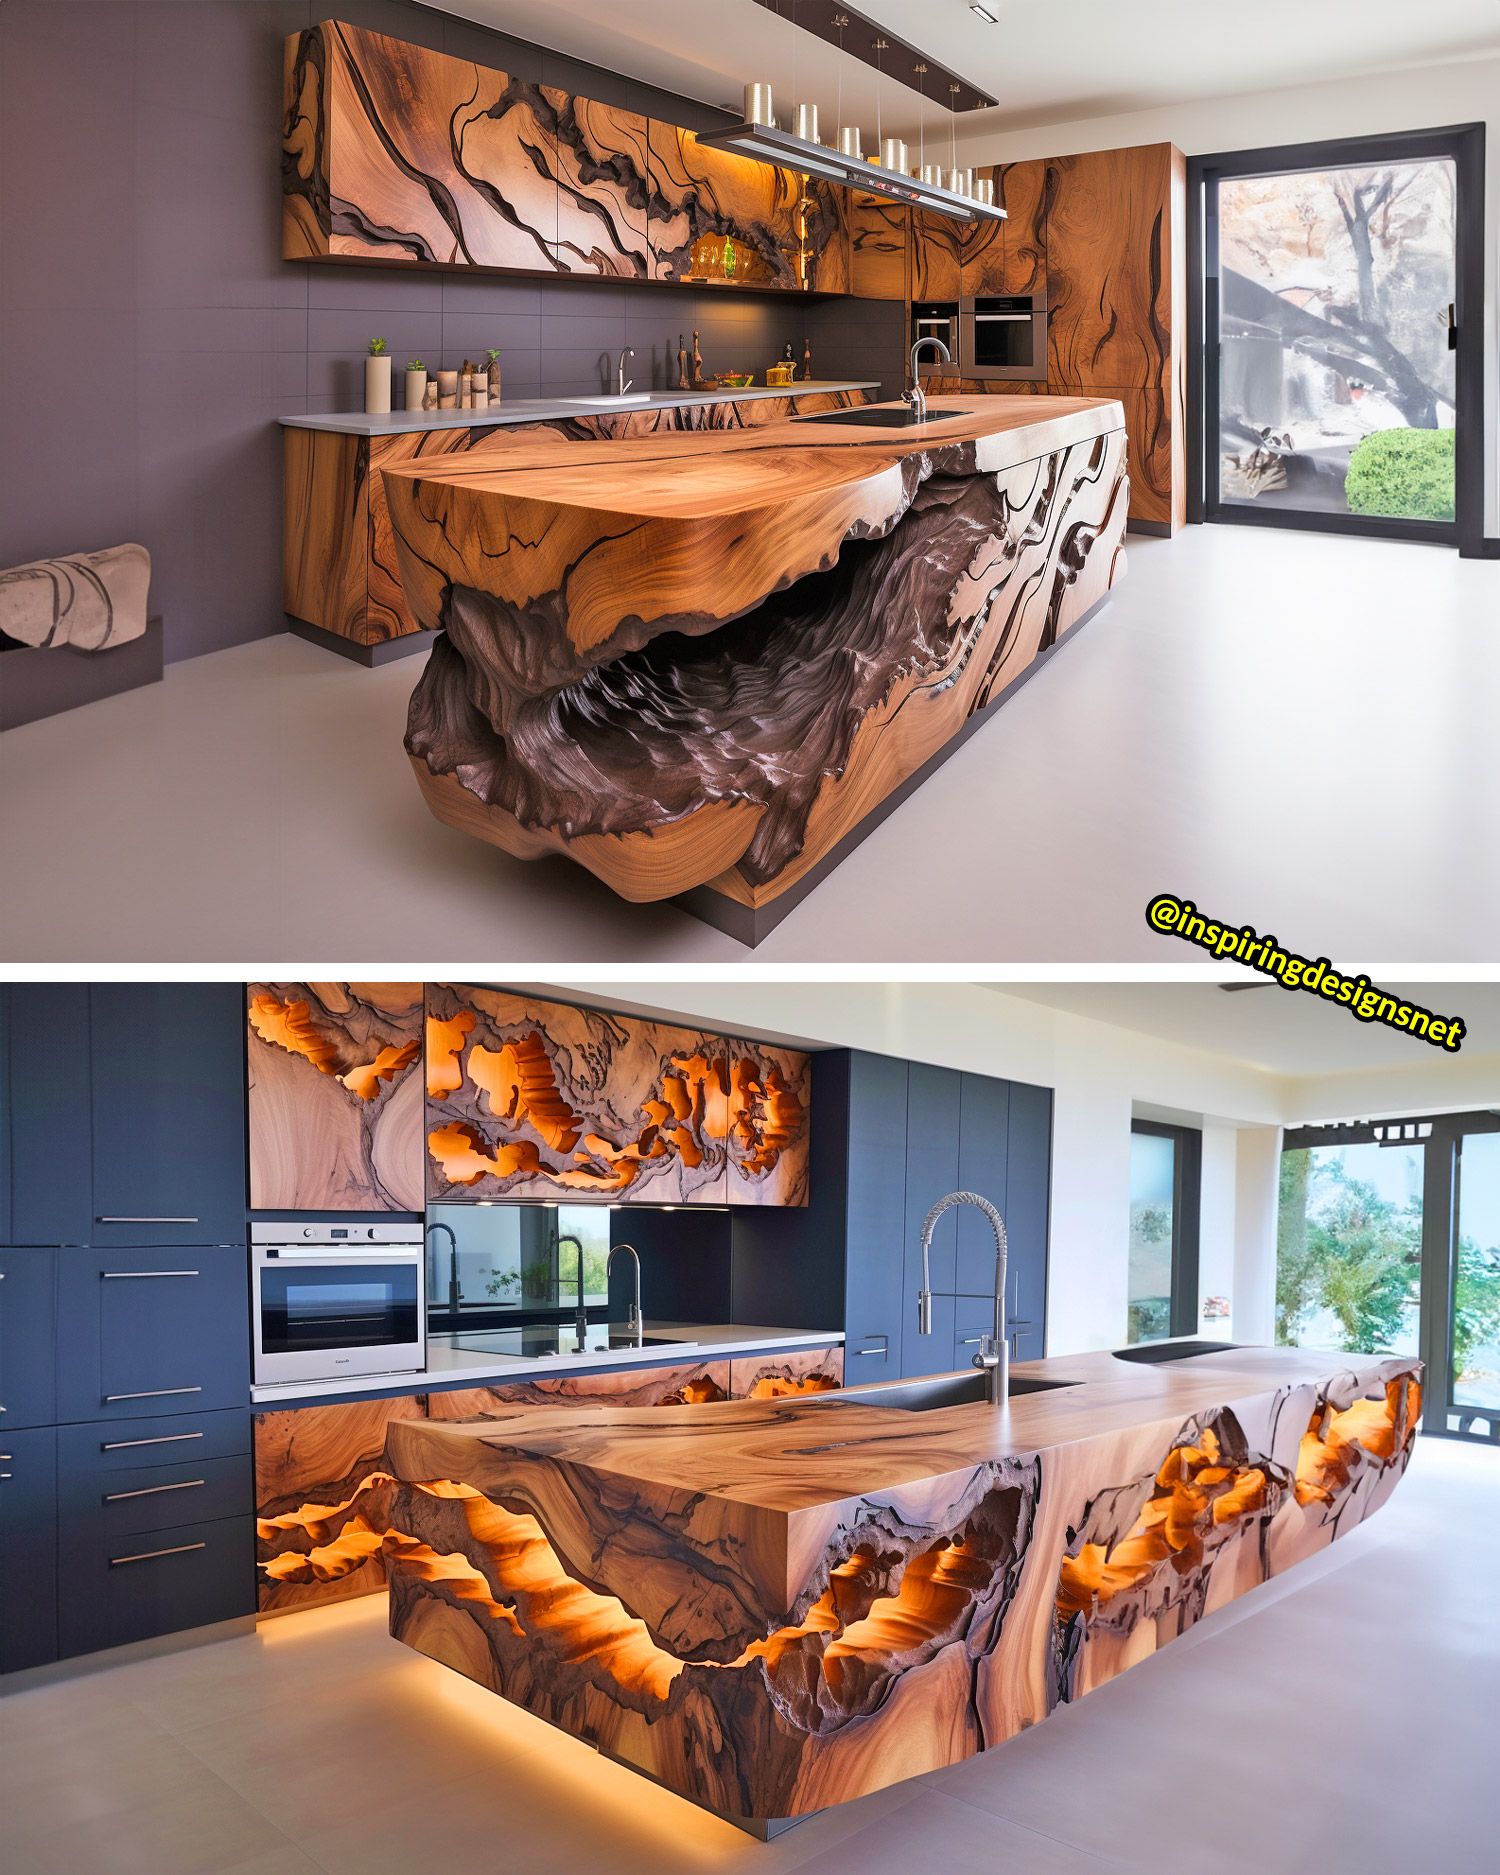 3d Kitchen Designs: Bring Your Kitchen to Life with Stunning 3D Kitchen Designs